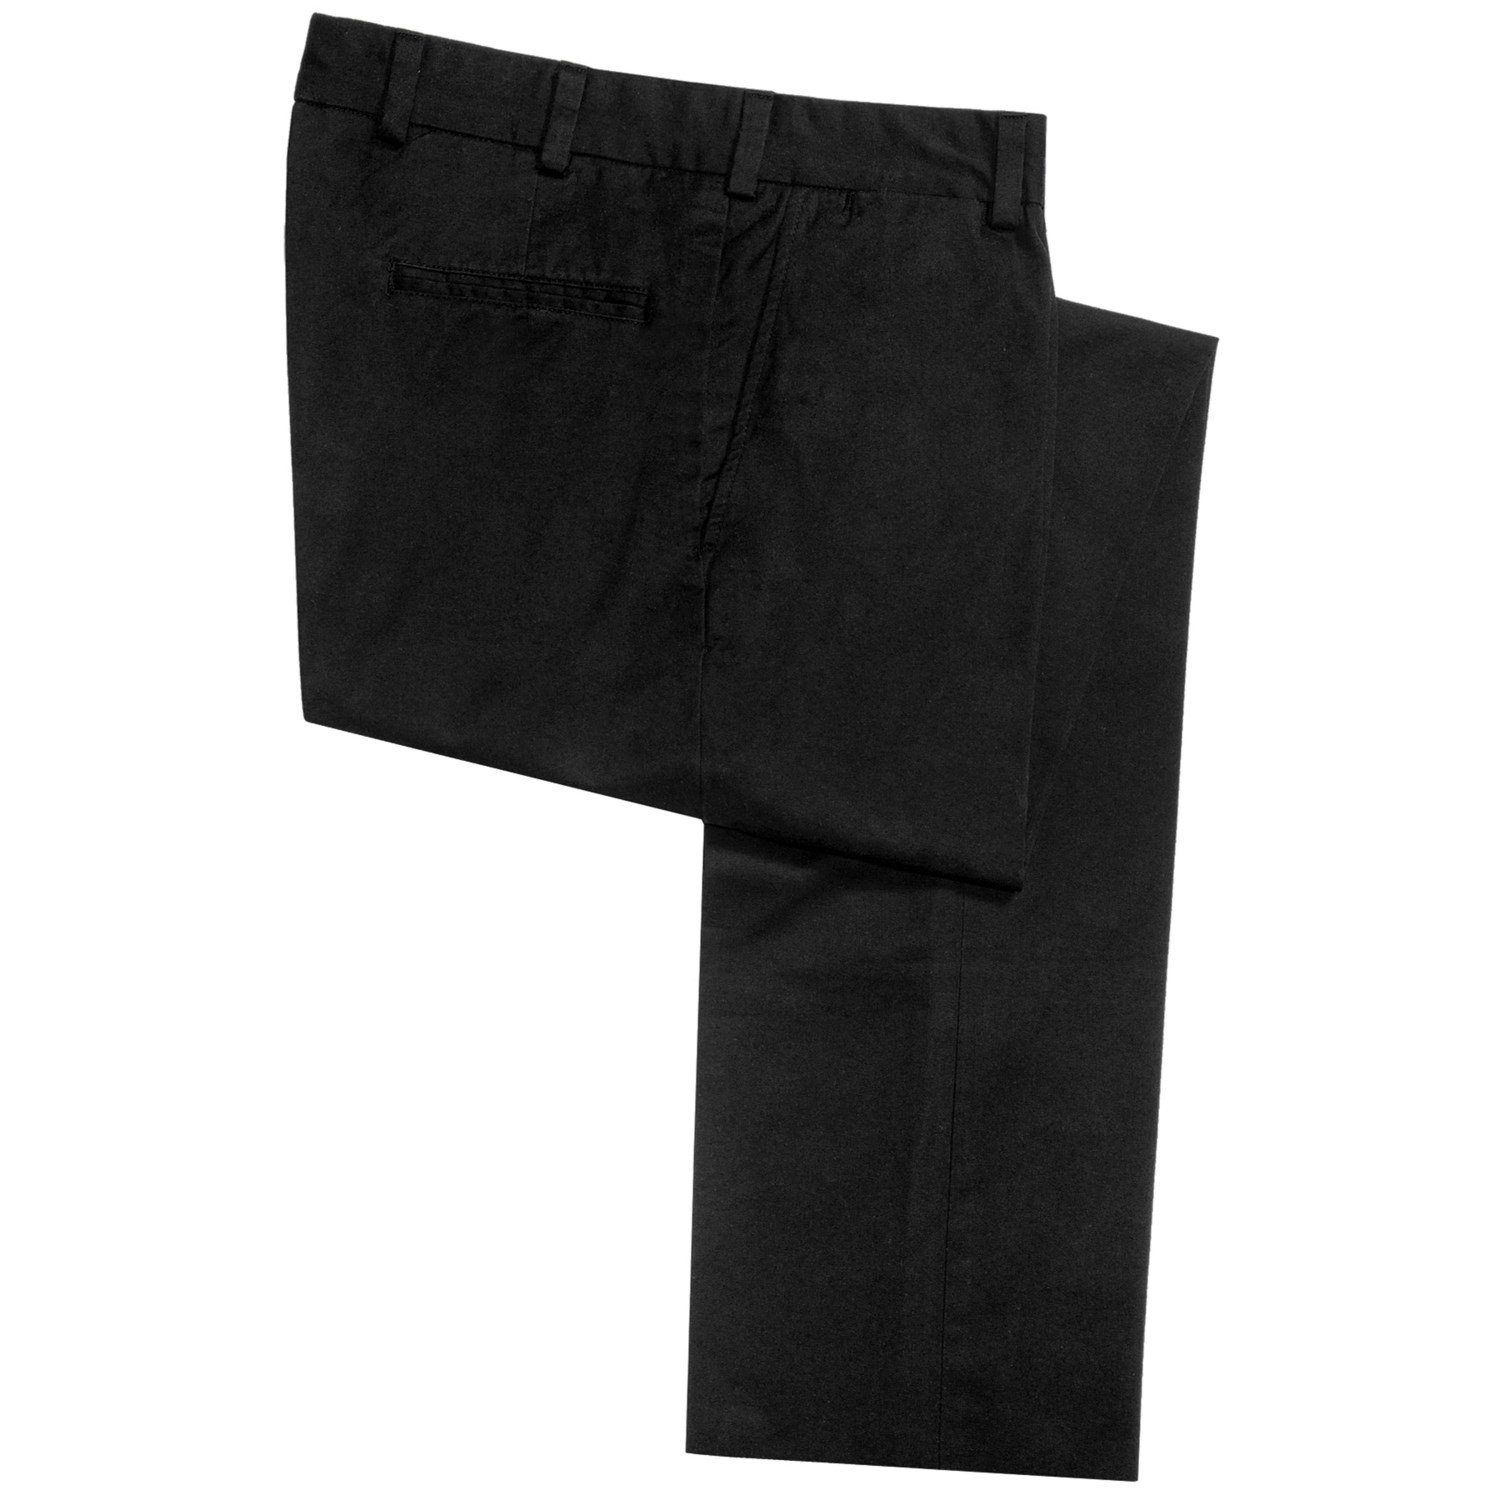 Bills Khakis M3 Pants - Chamois Cloth, Flat Front (For Men)